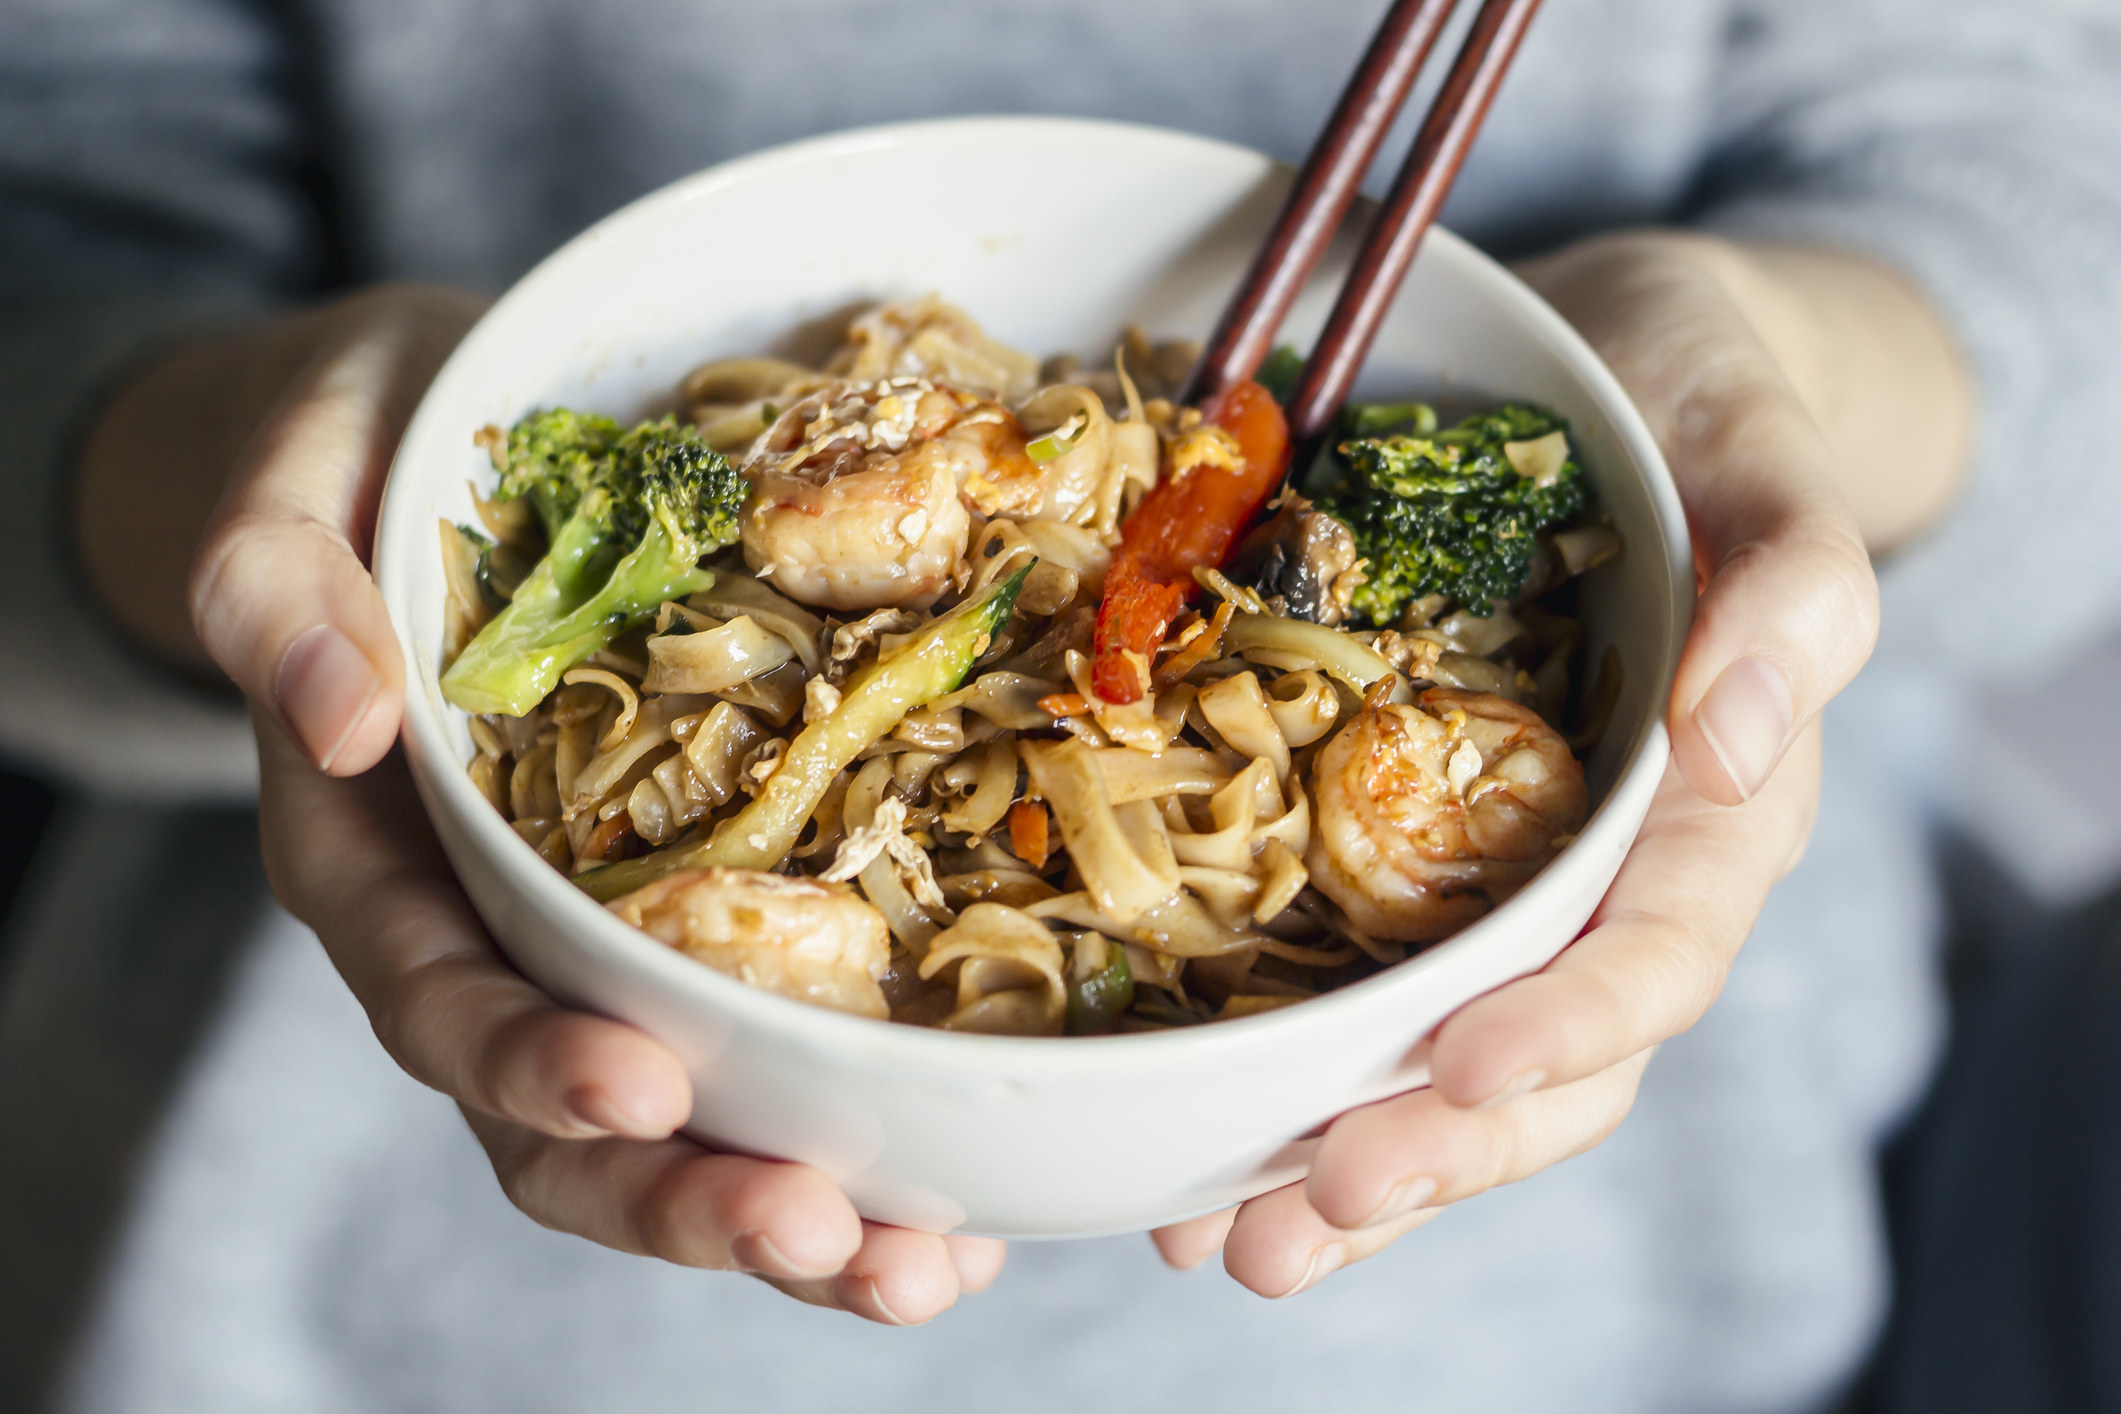 A bowl of shrimp and vegetable noodles